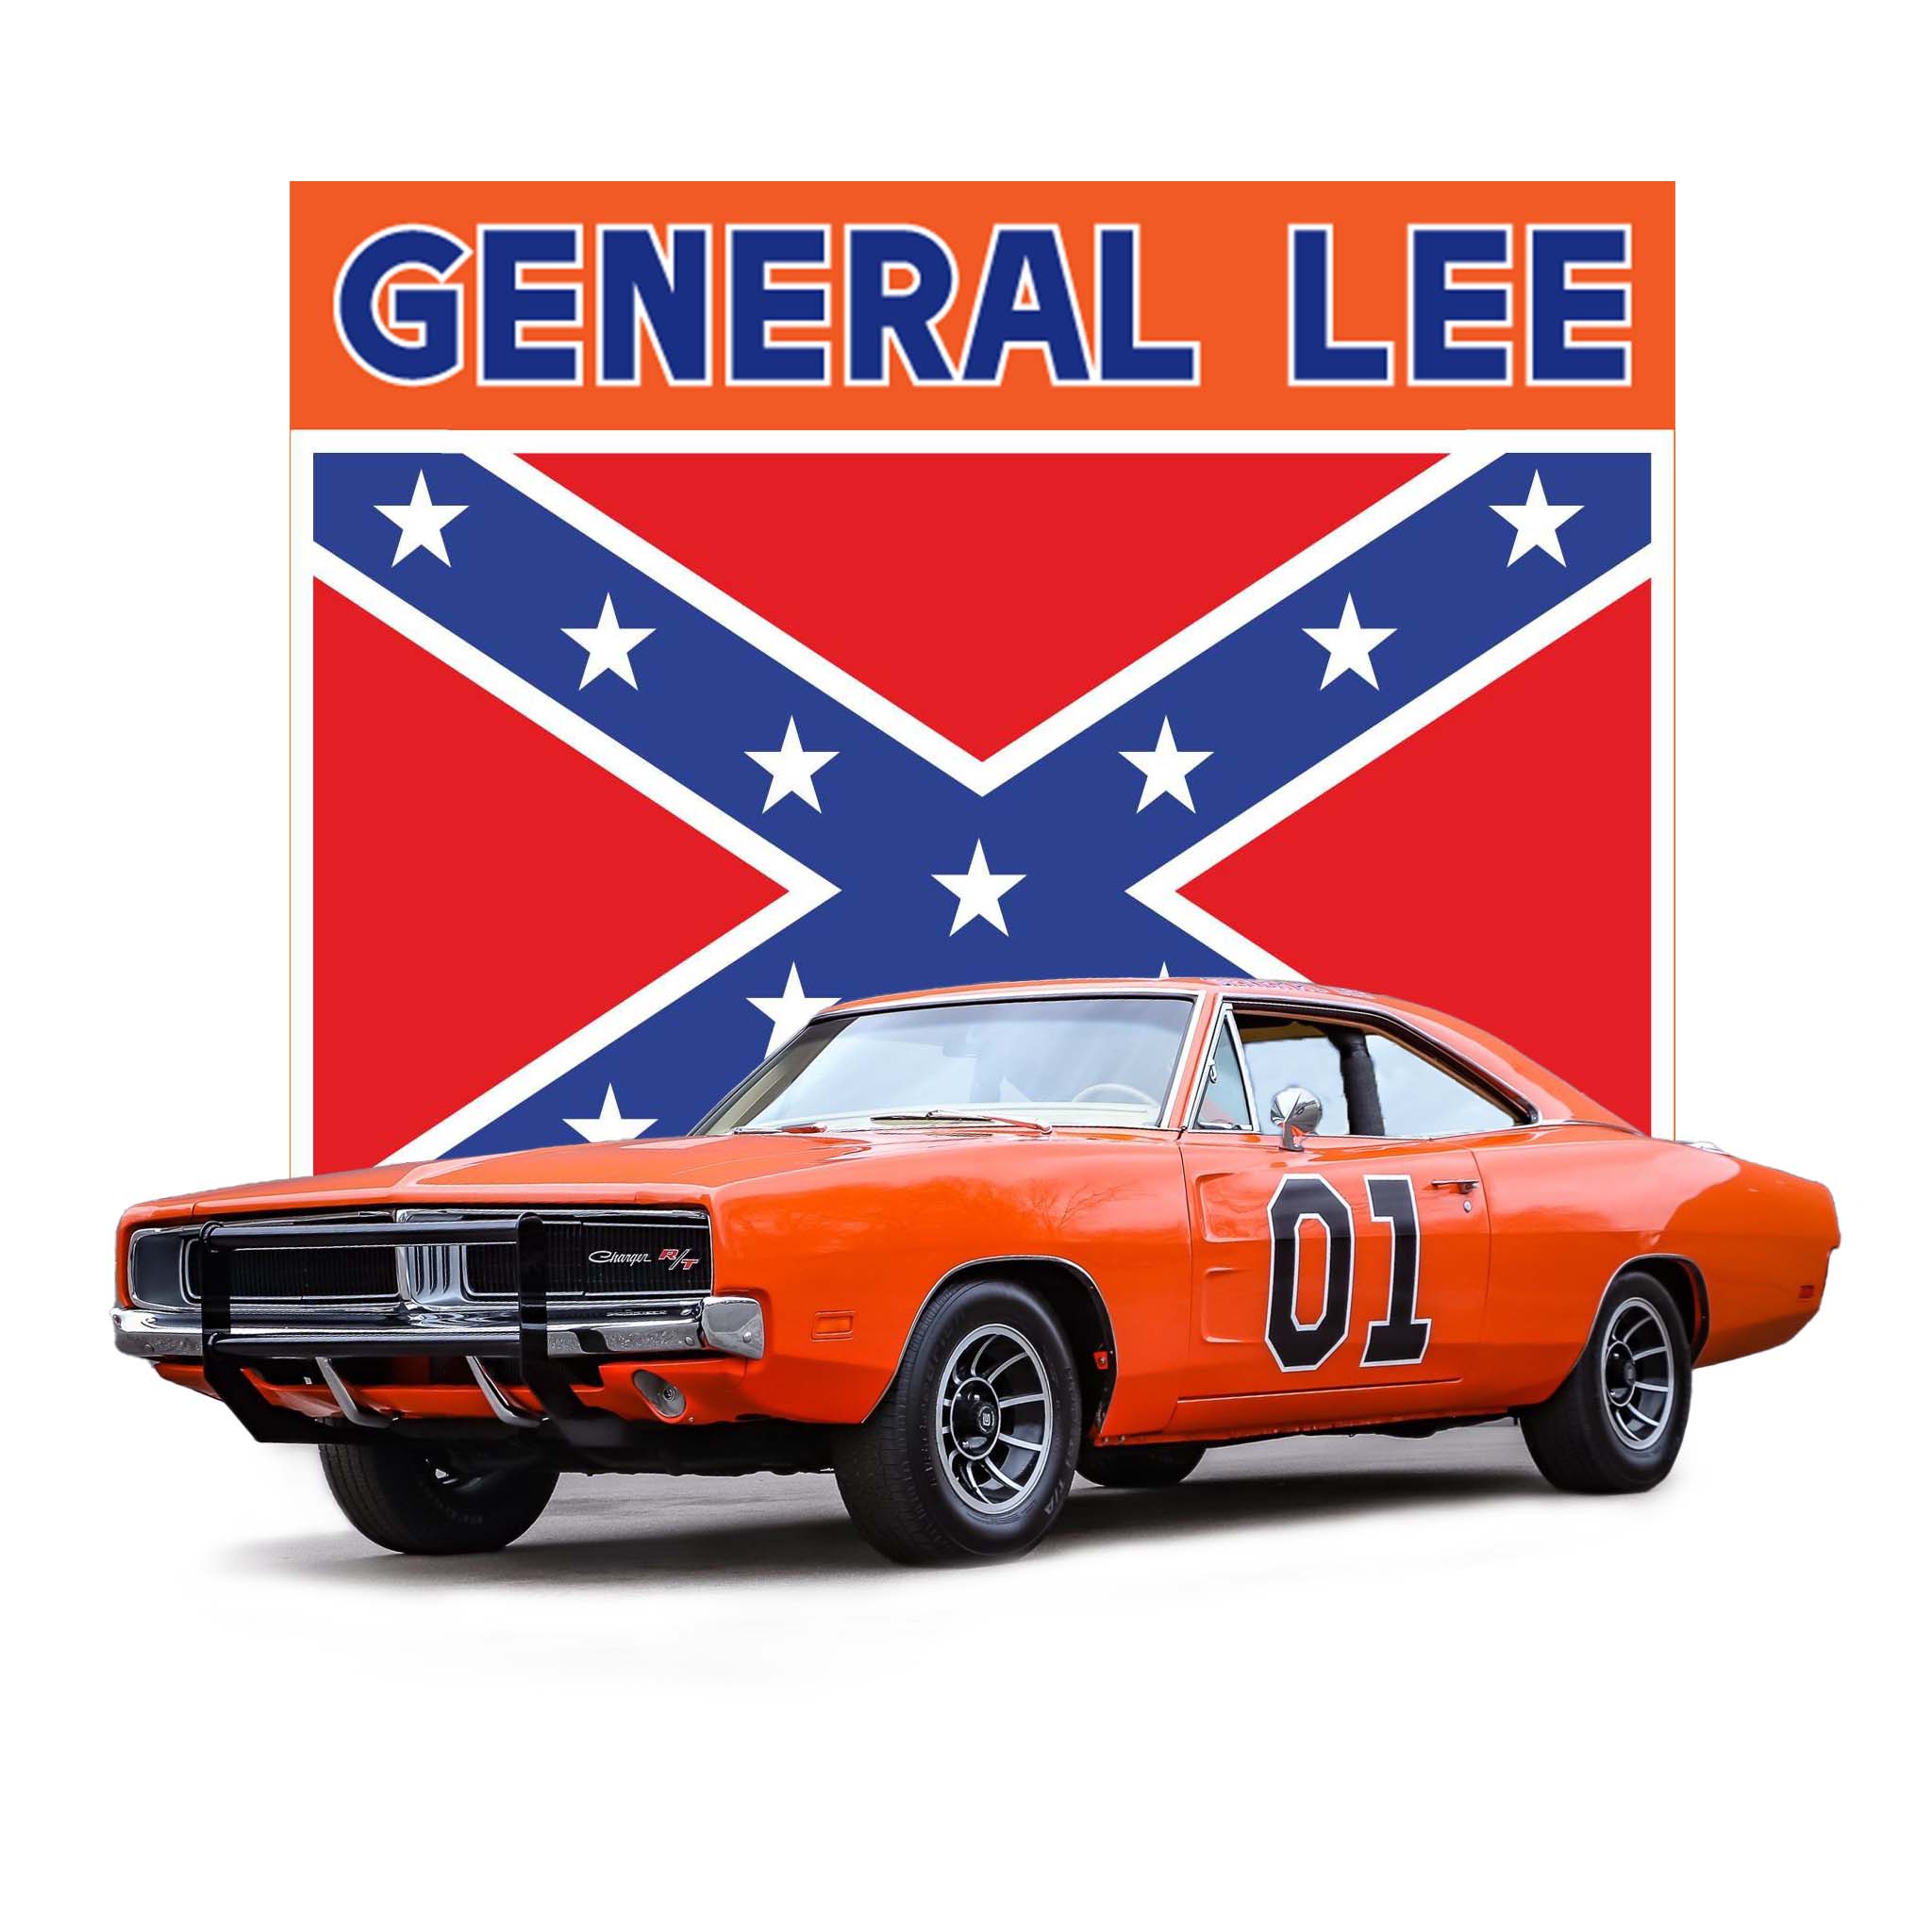 the general lee car